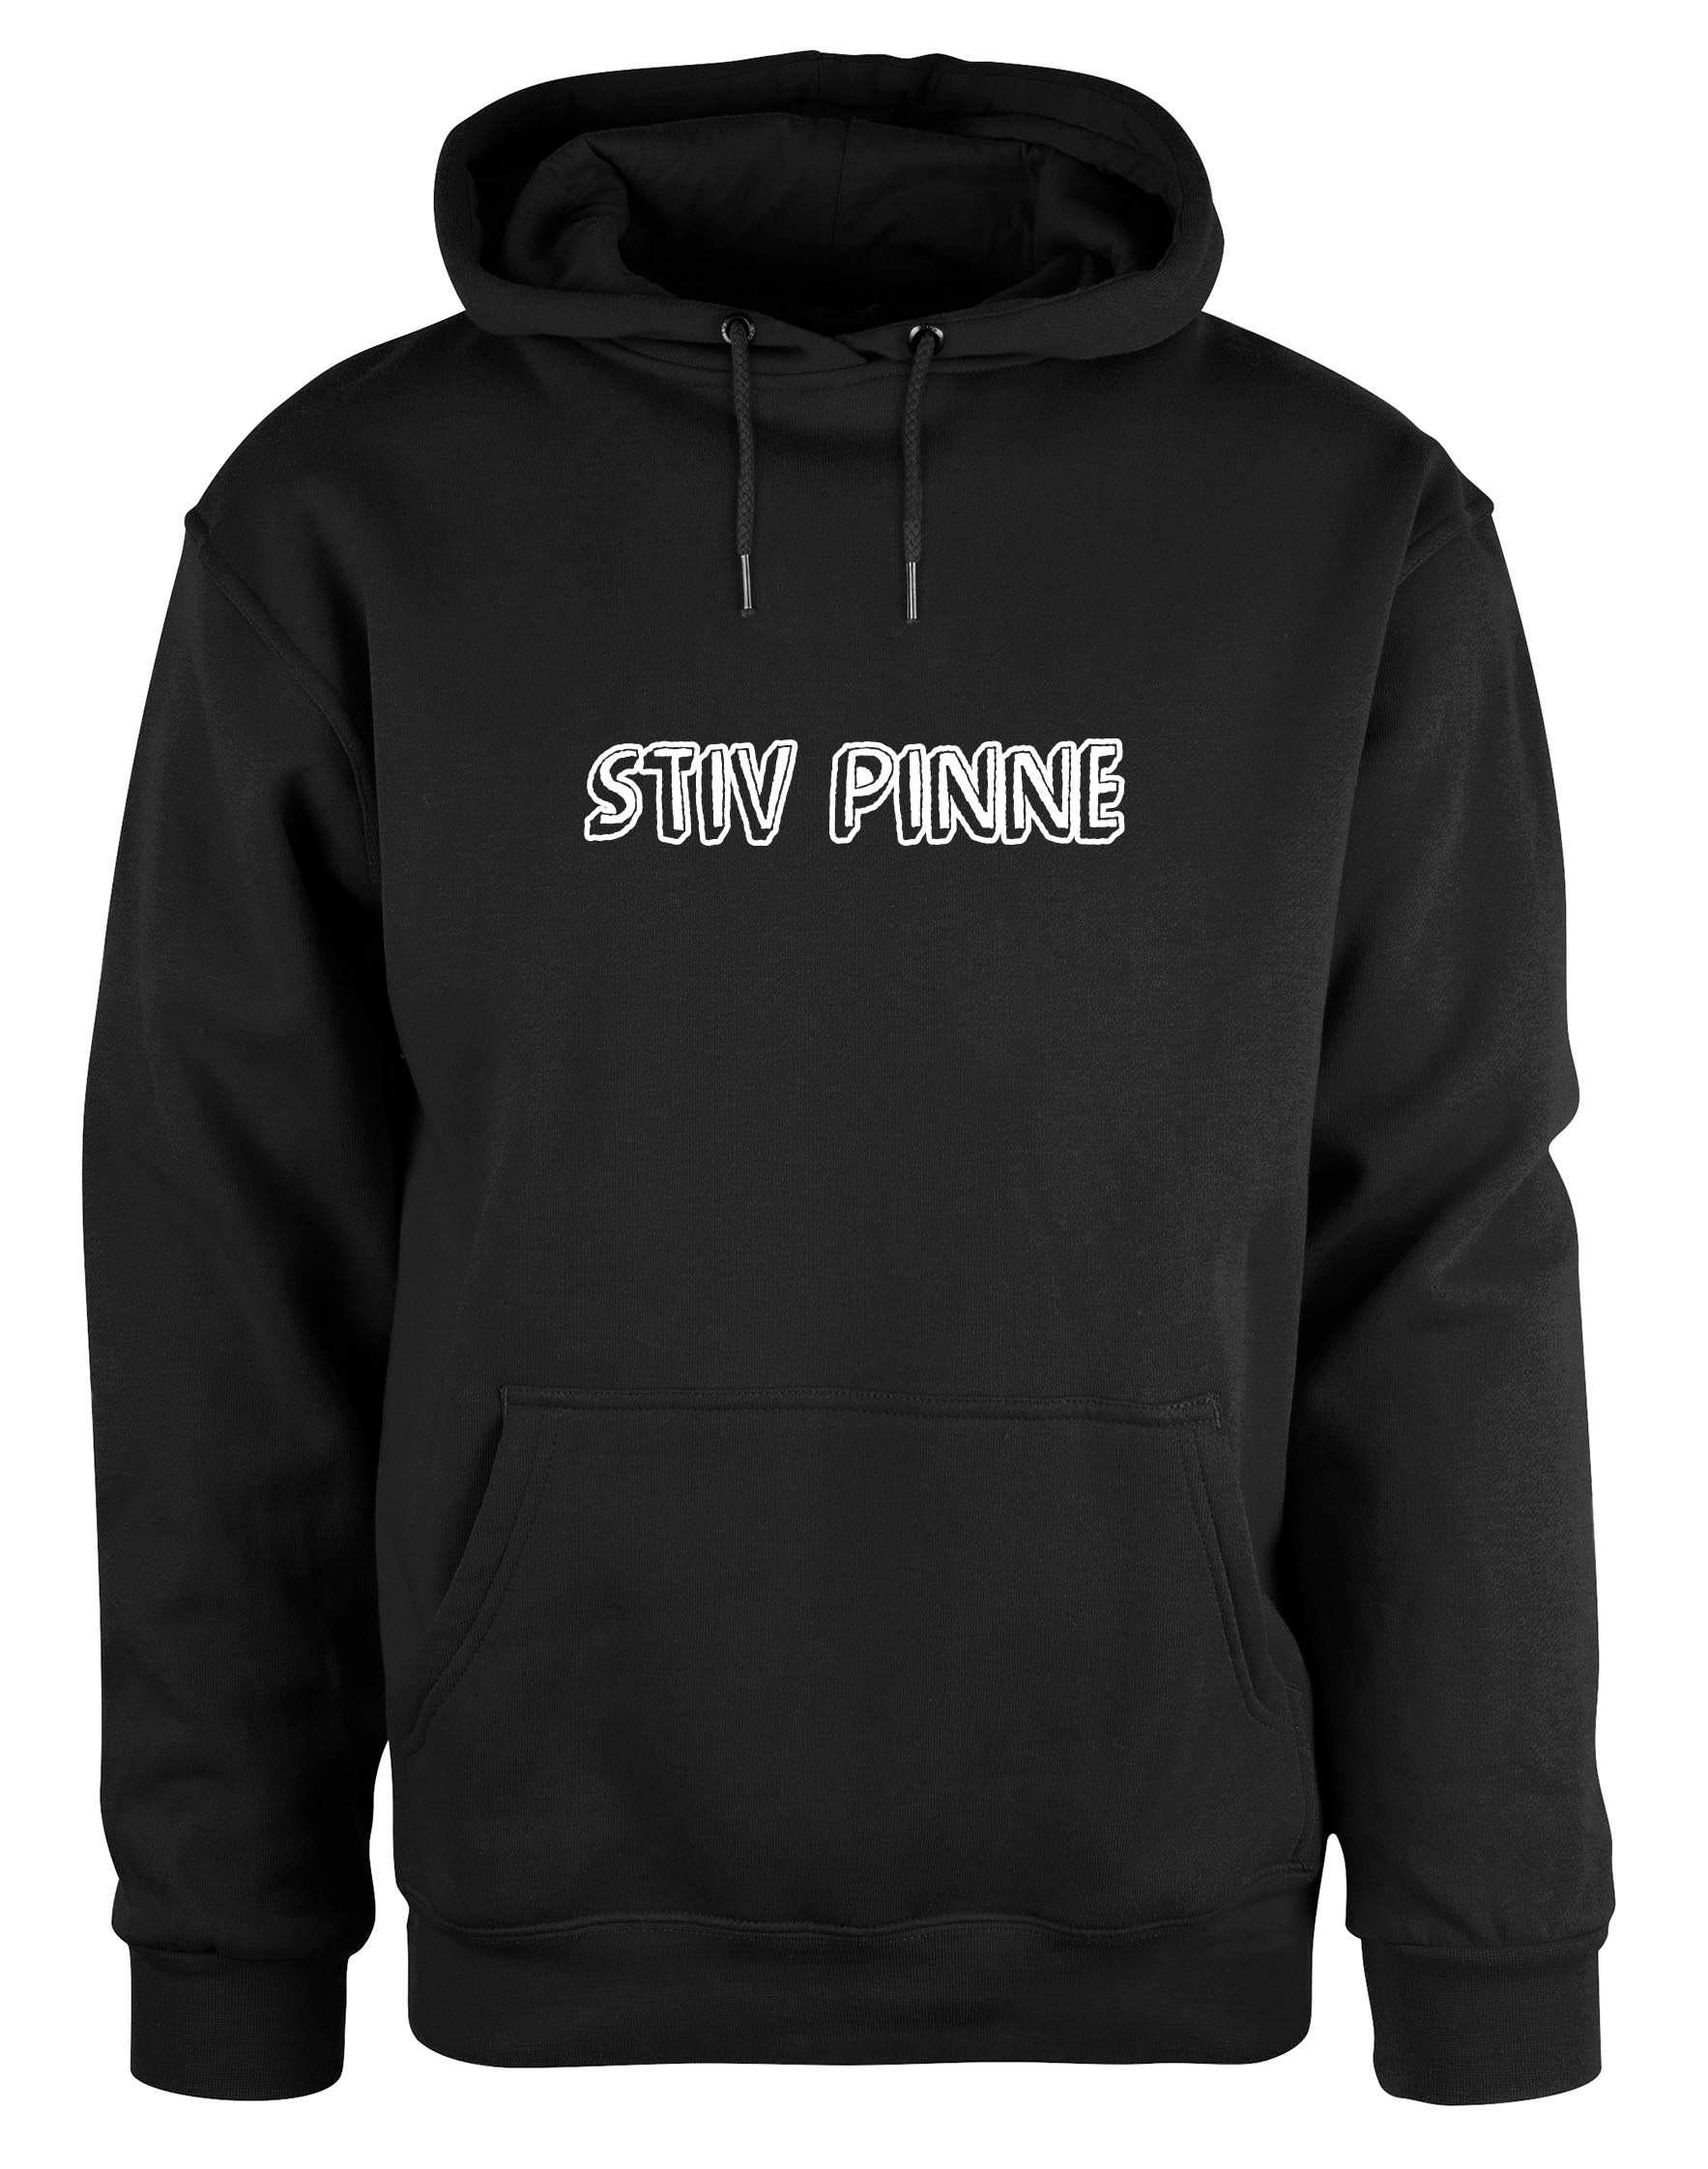 Stiv Pinne hoodie